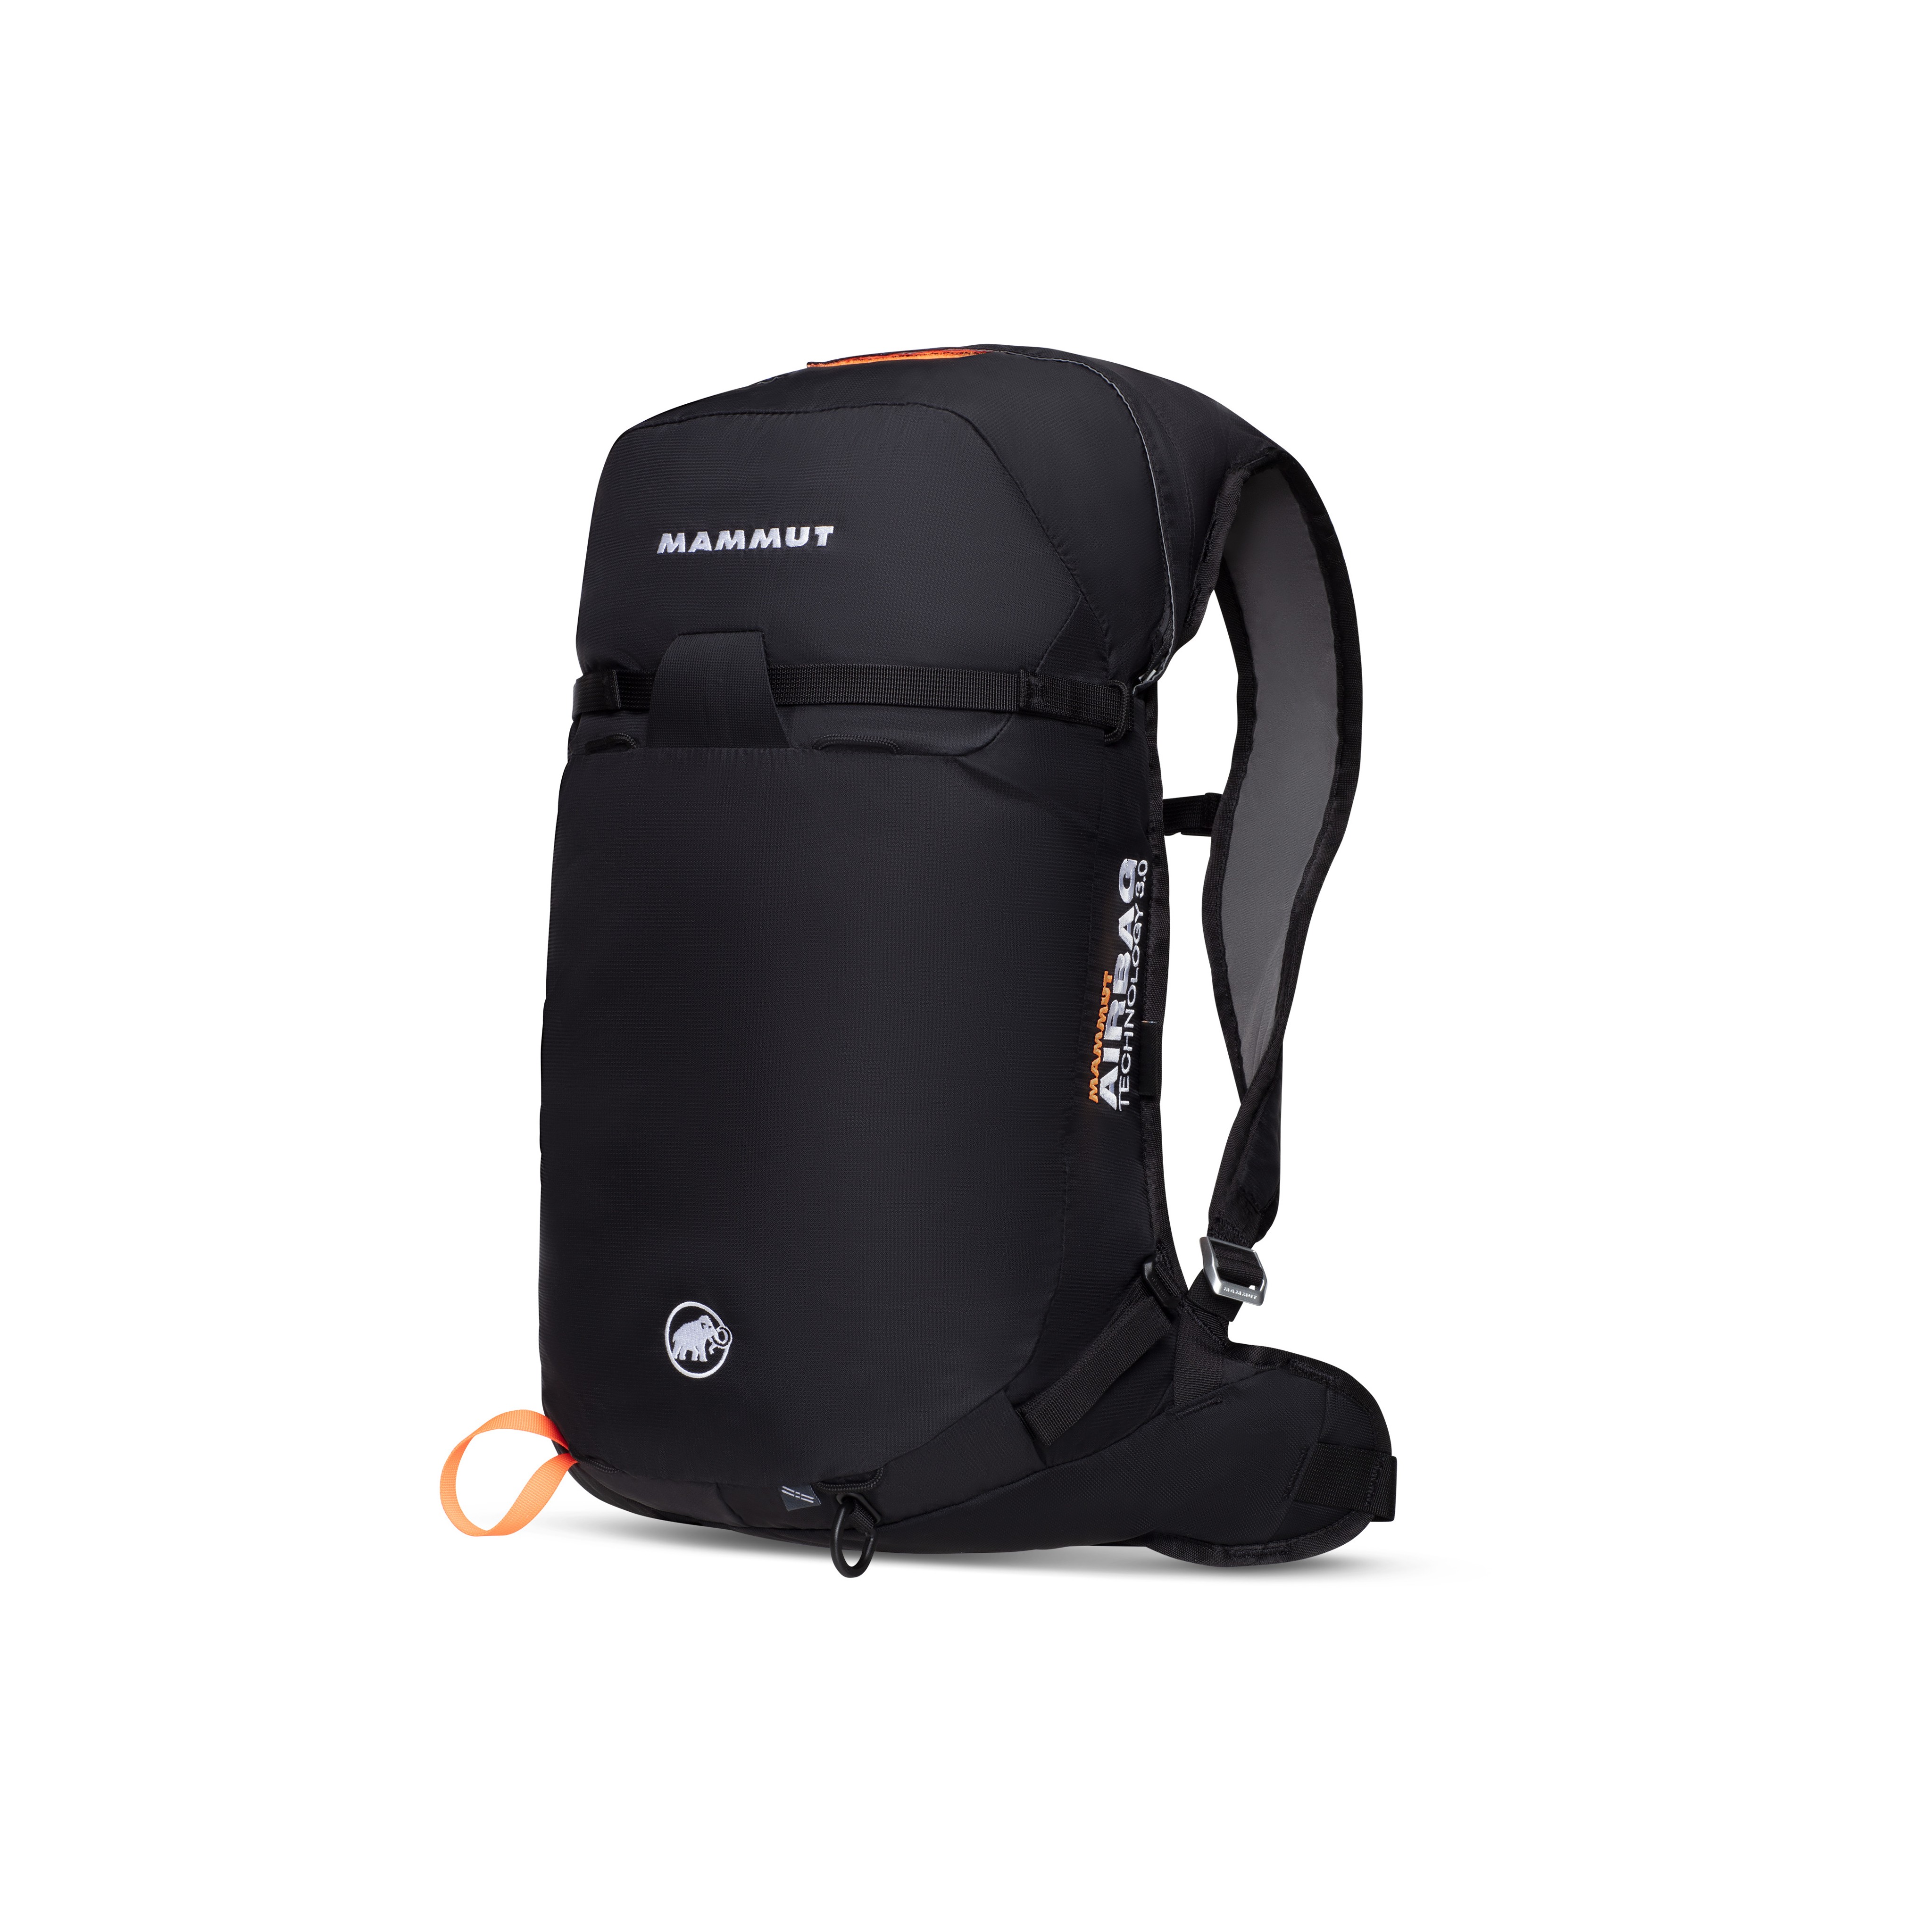 Ultralight Removable Airbag 3.0 - black-vibrant orange, 20 L product image